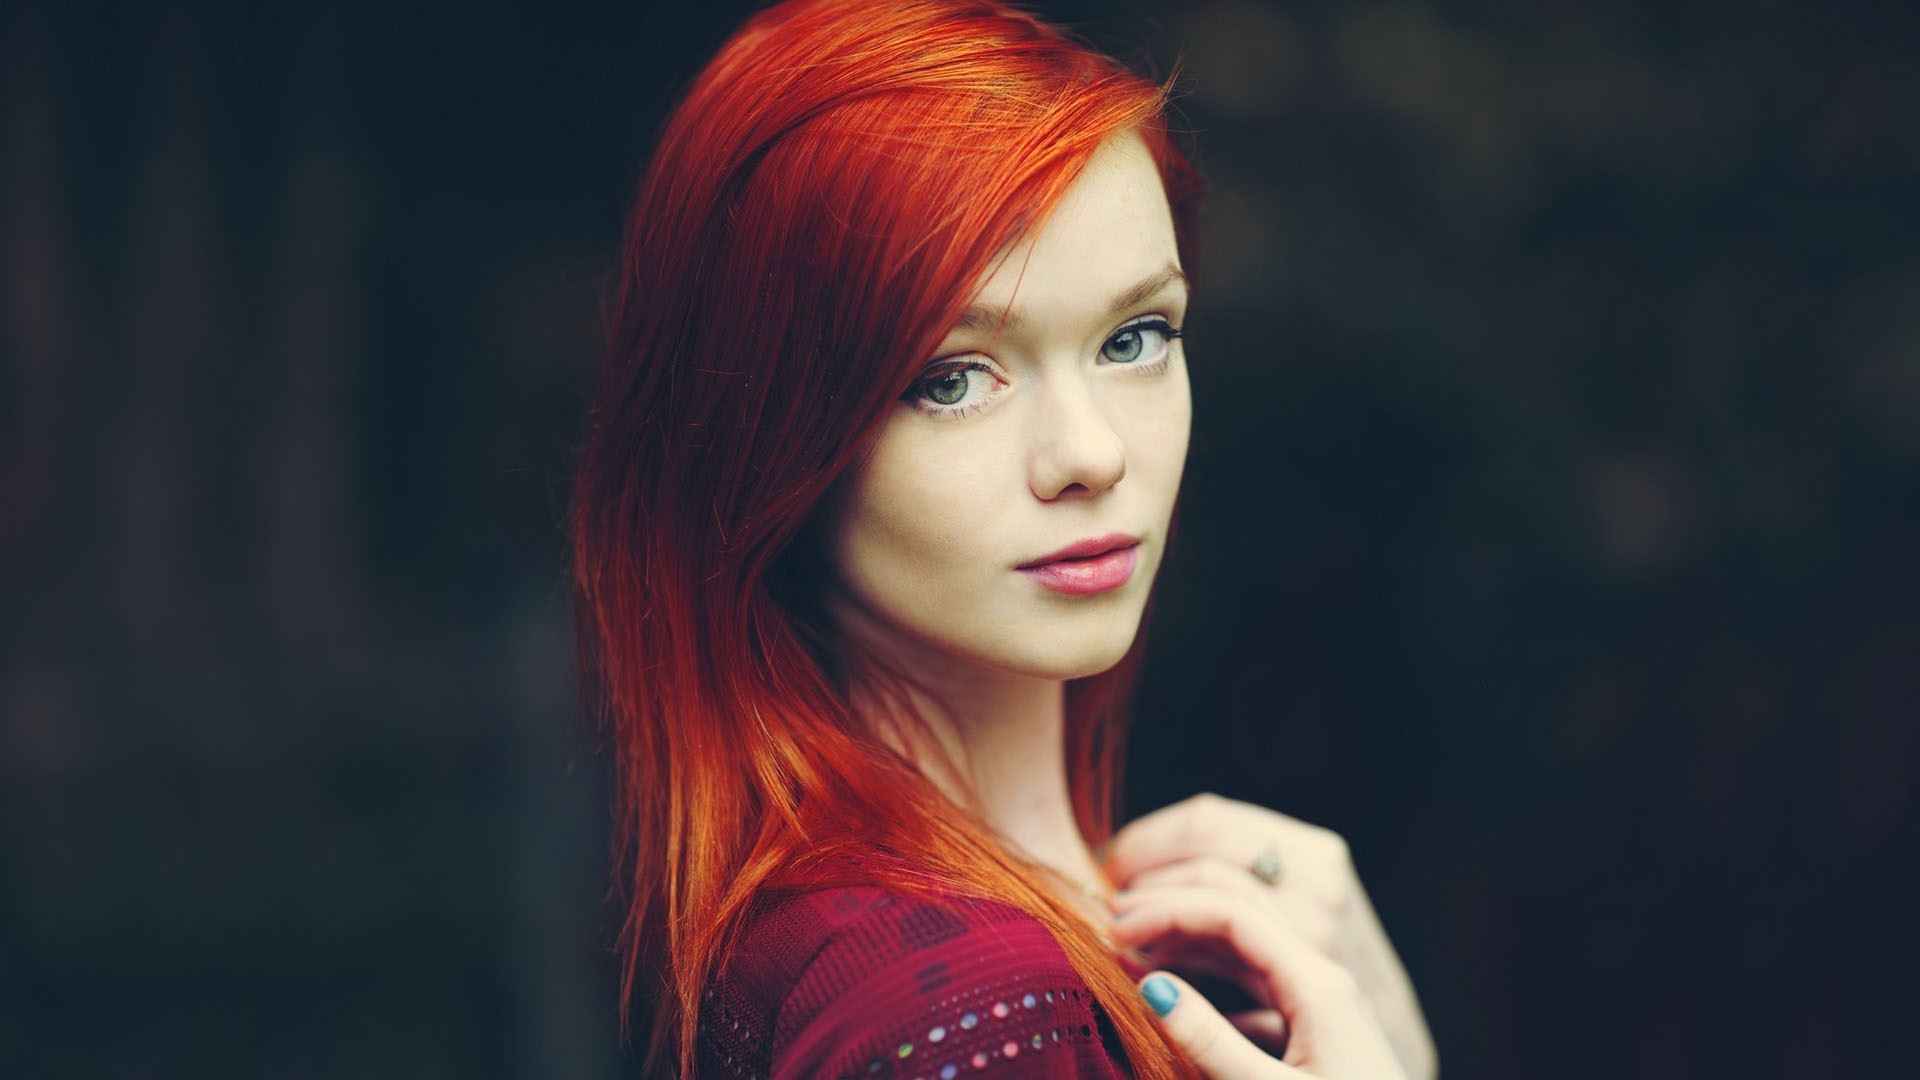 Model Women Pale Redhead Green Eyes Wallpapers Hd Desktop And